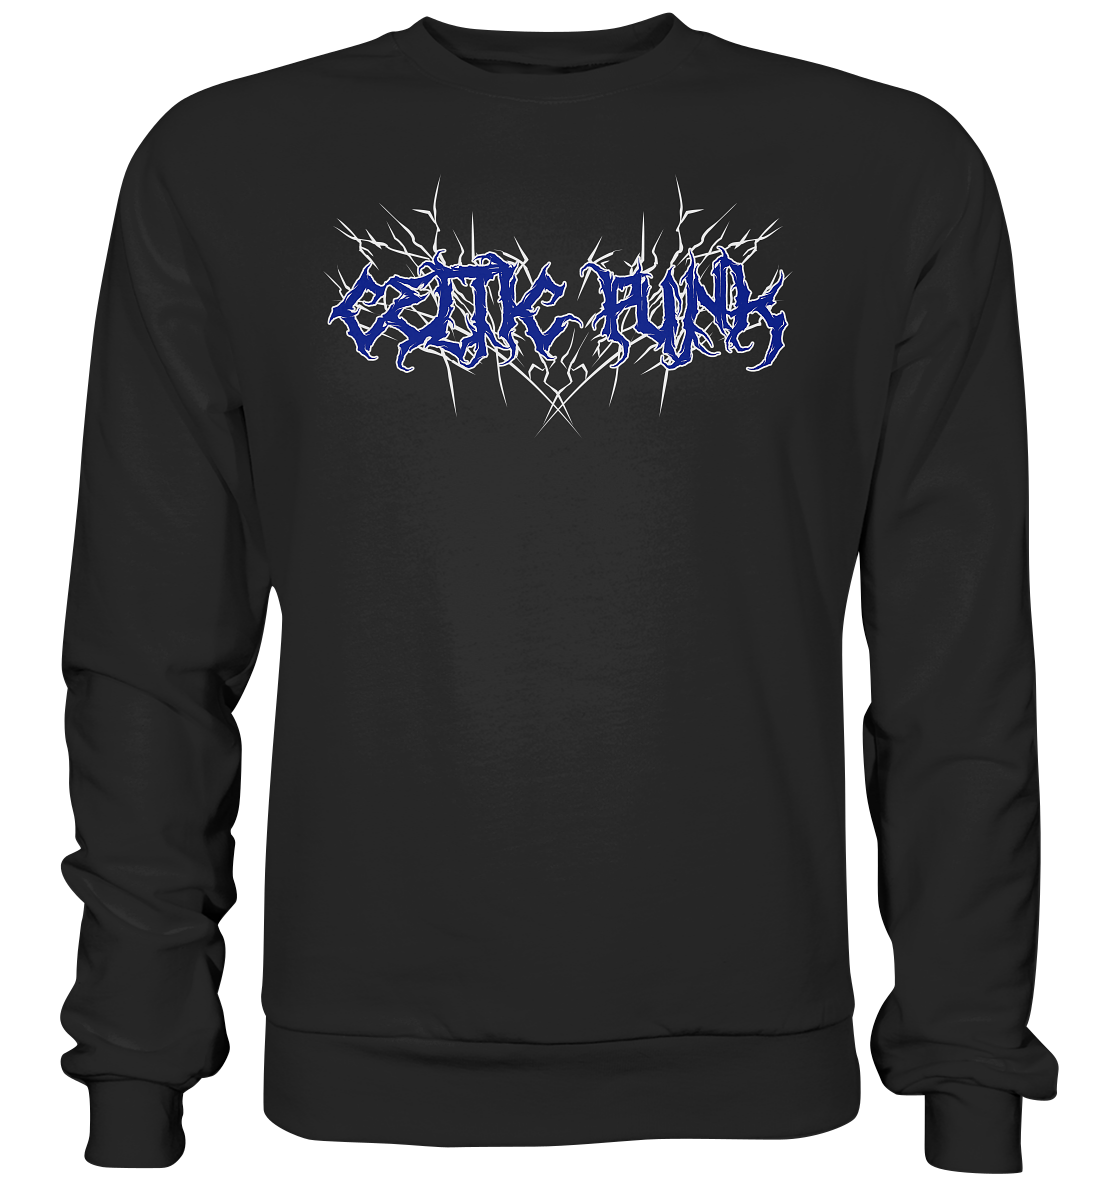 Celtic Punk "Metal Band" - Premium Sweatshirt